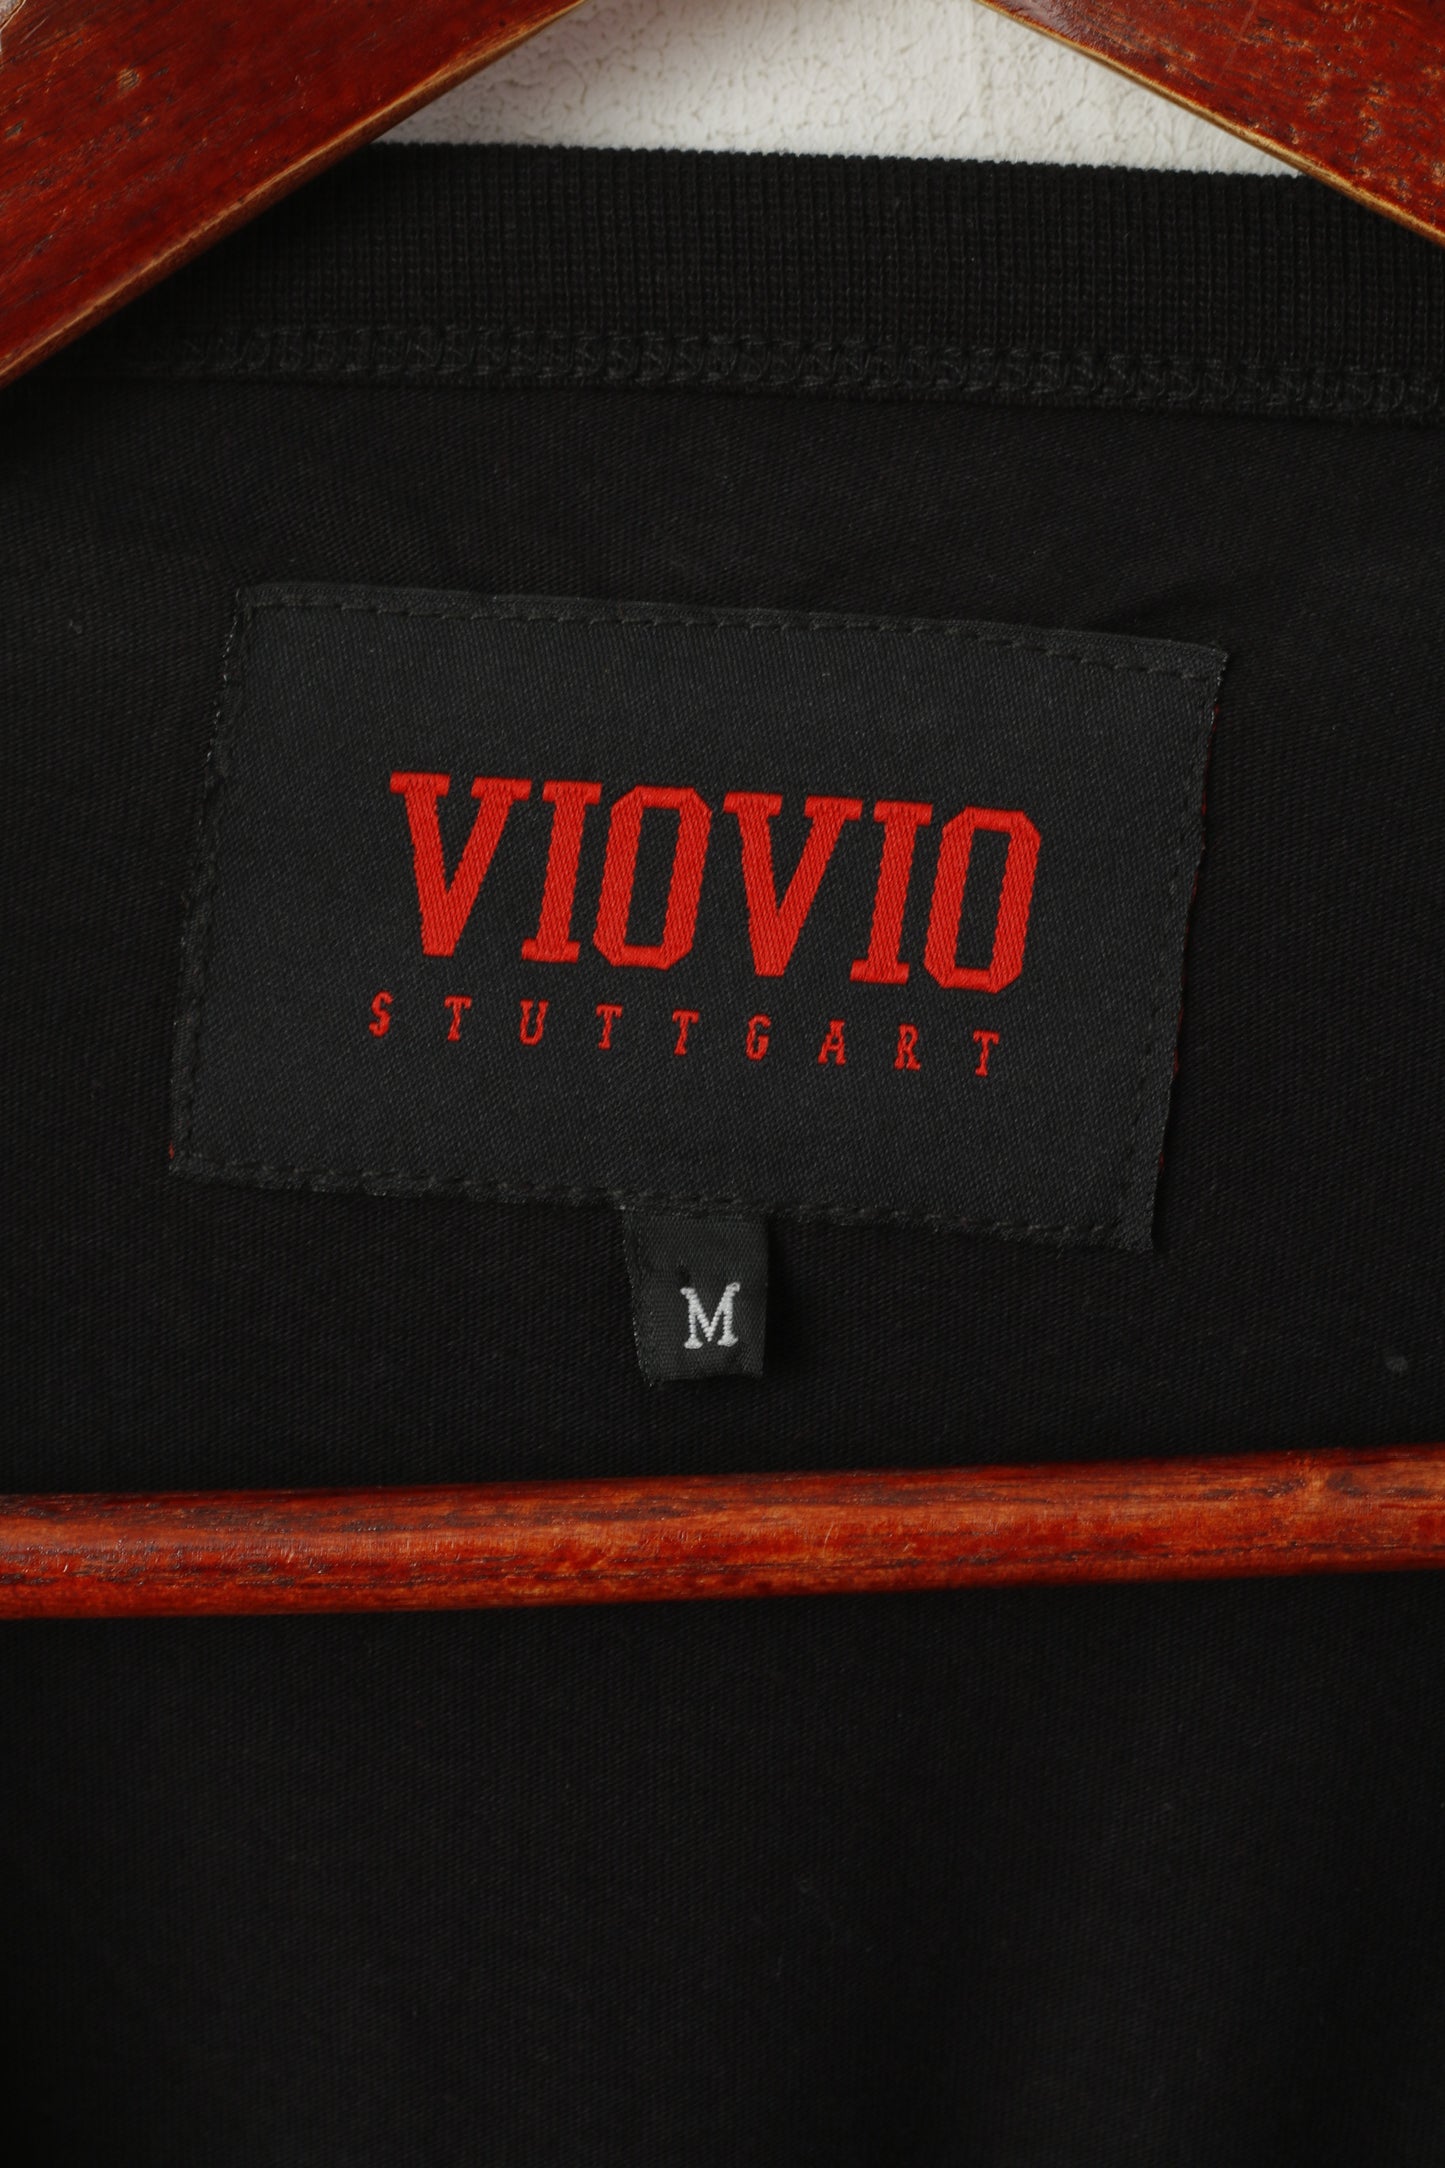 VioVio Stuttgart Femmes M Sweat-shirt Noir Coton Recadrée Oversize Top